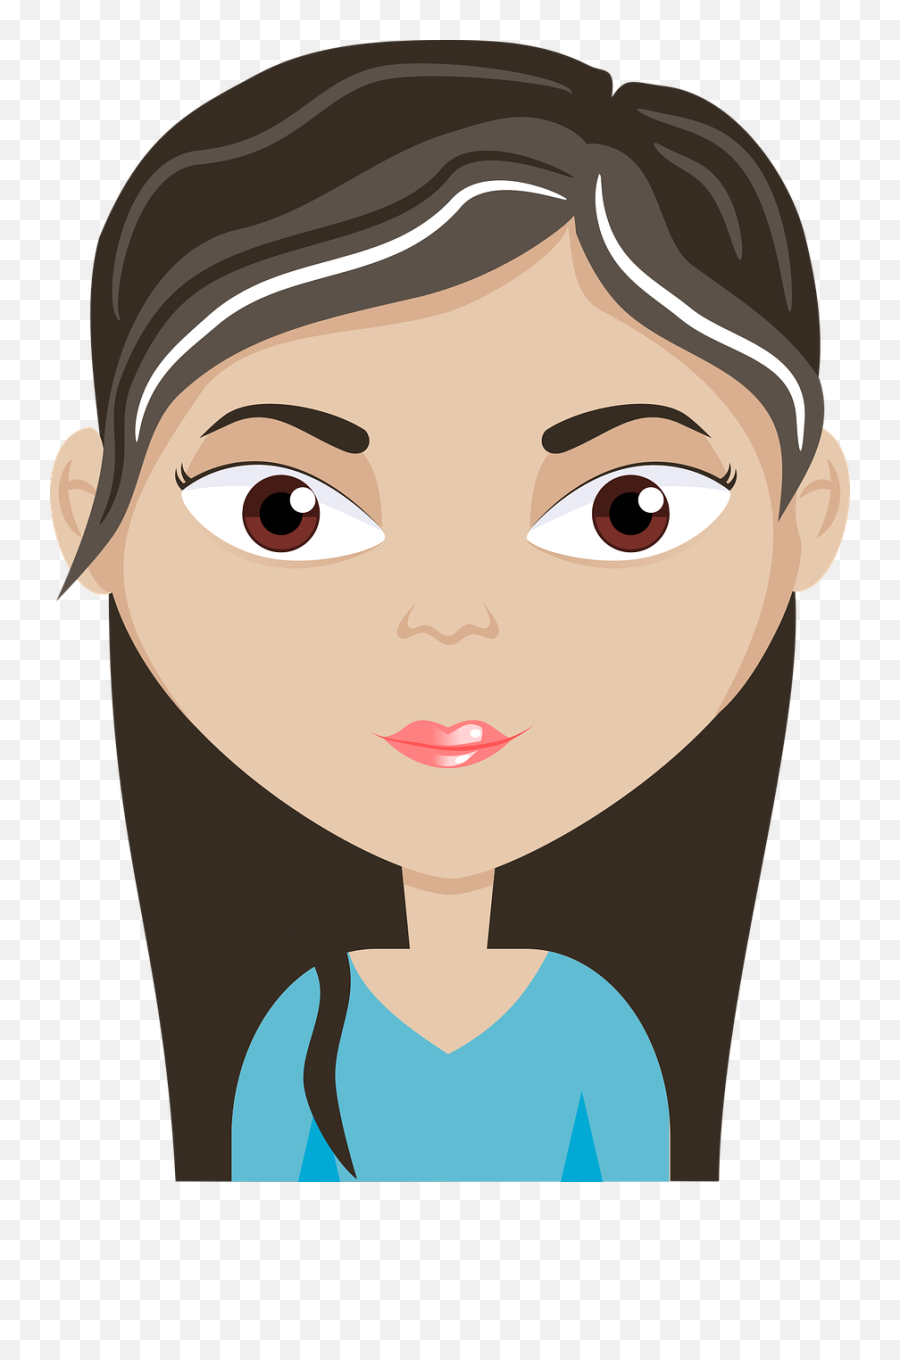 Avatar Cartoon Eyes - Free Vector Graphic On Pixabay Funny Female Avatar Png,Cartoon Eye Png